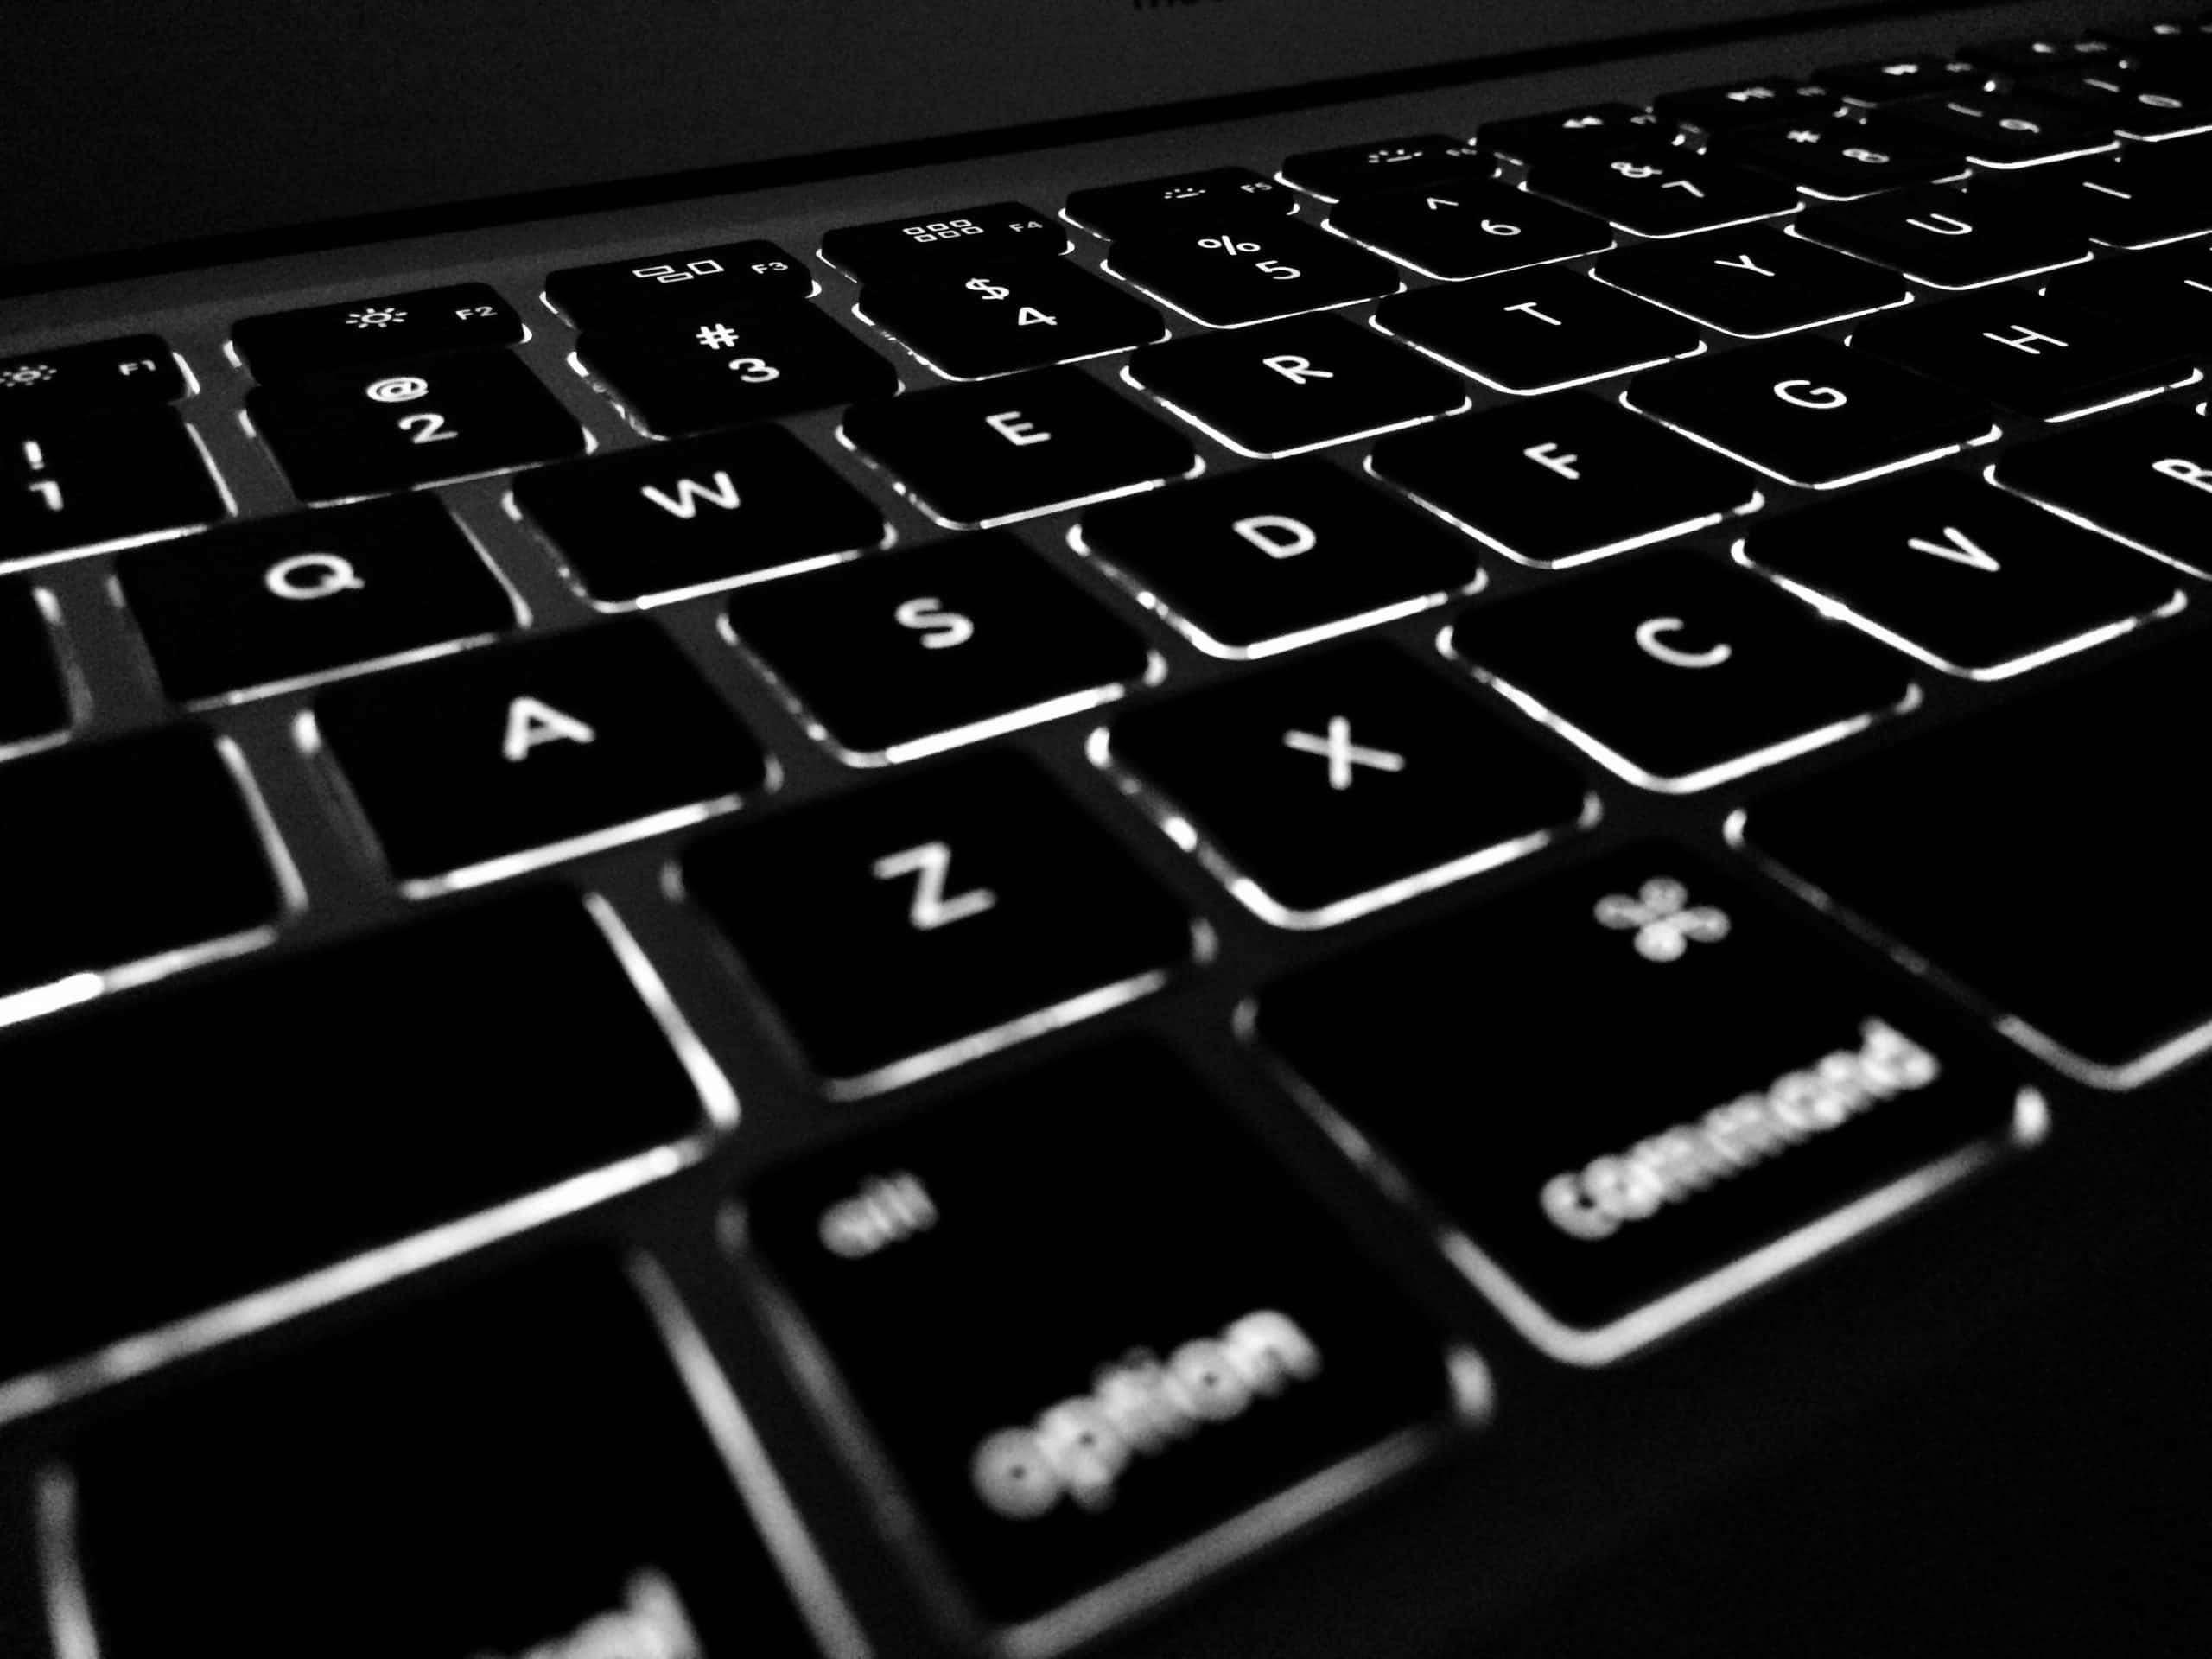 Detail of a black, white illuminated laptop keyboard